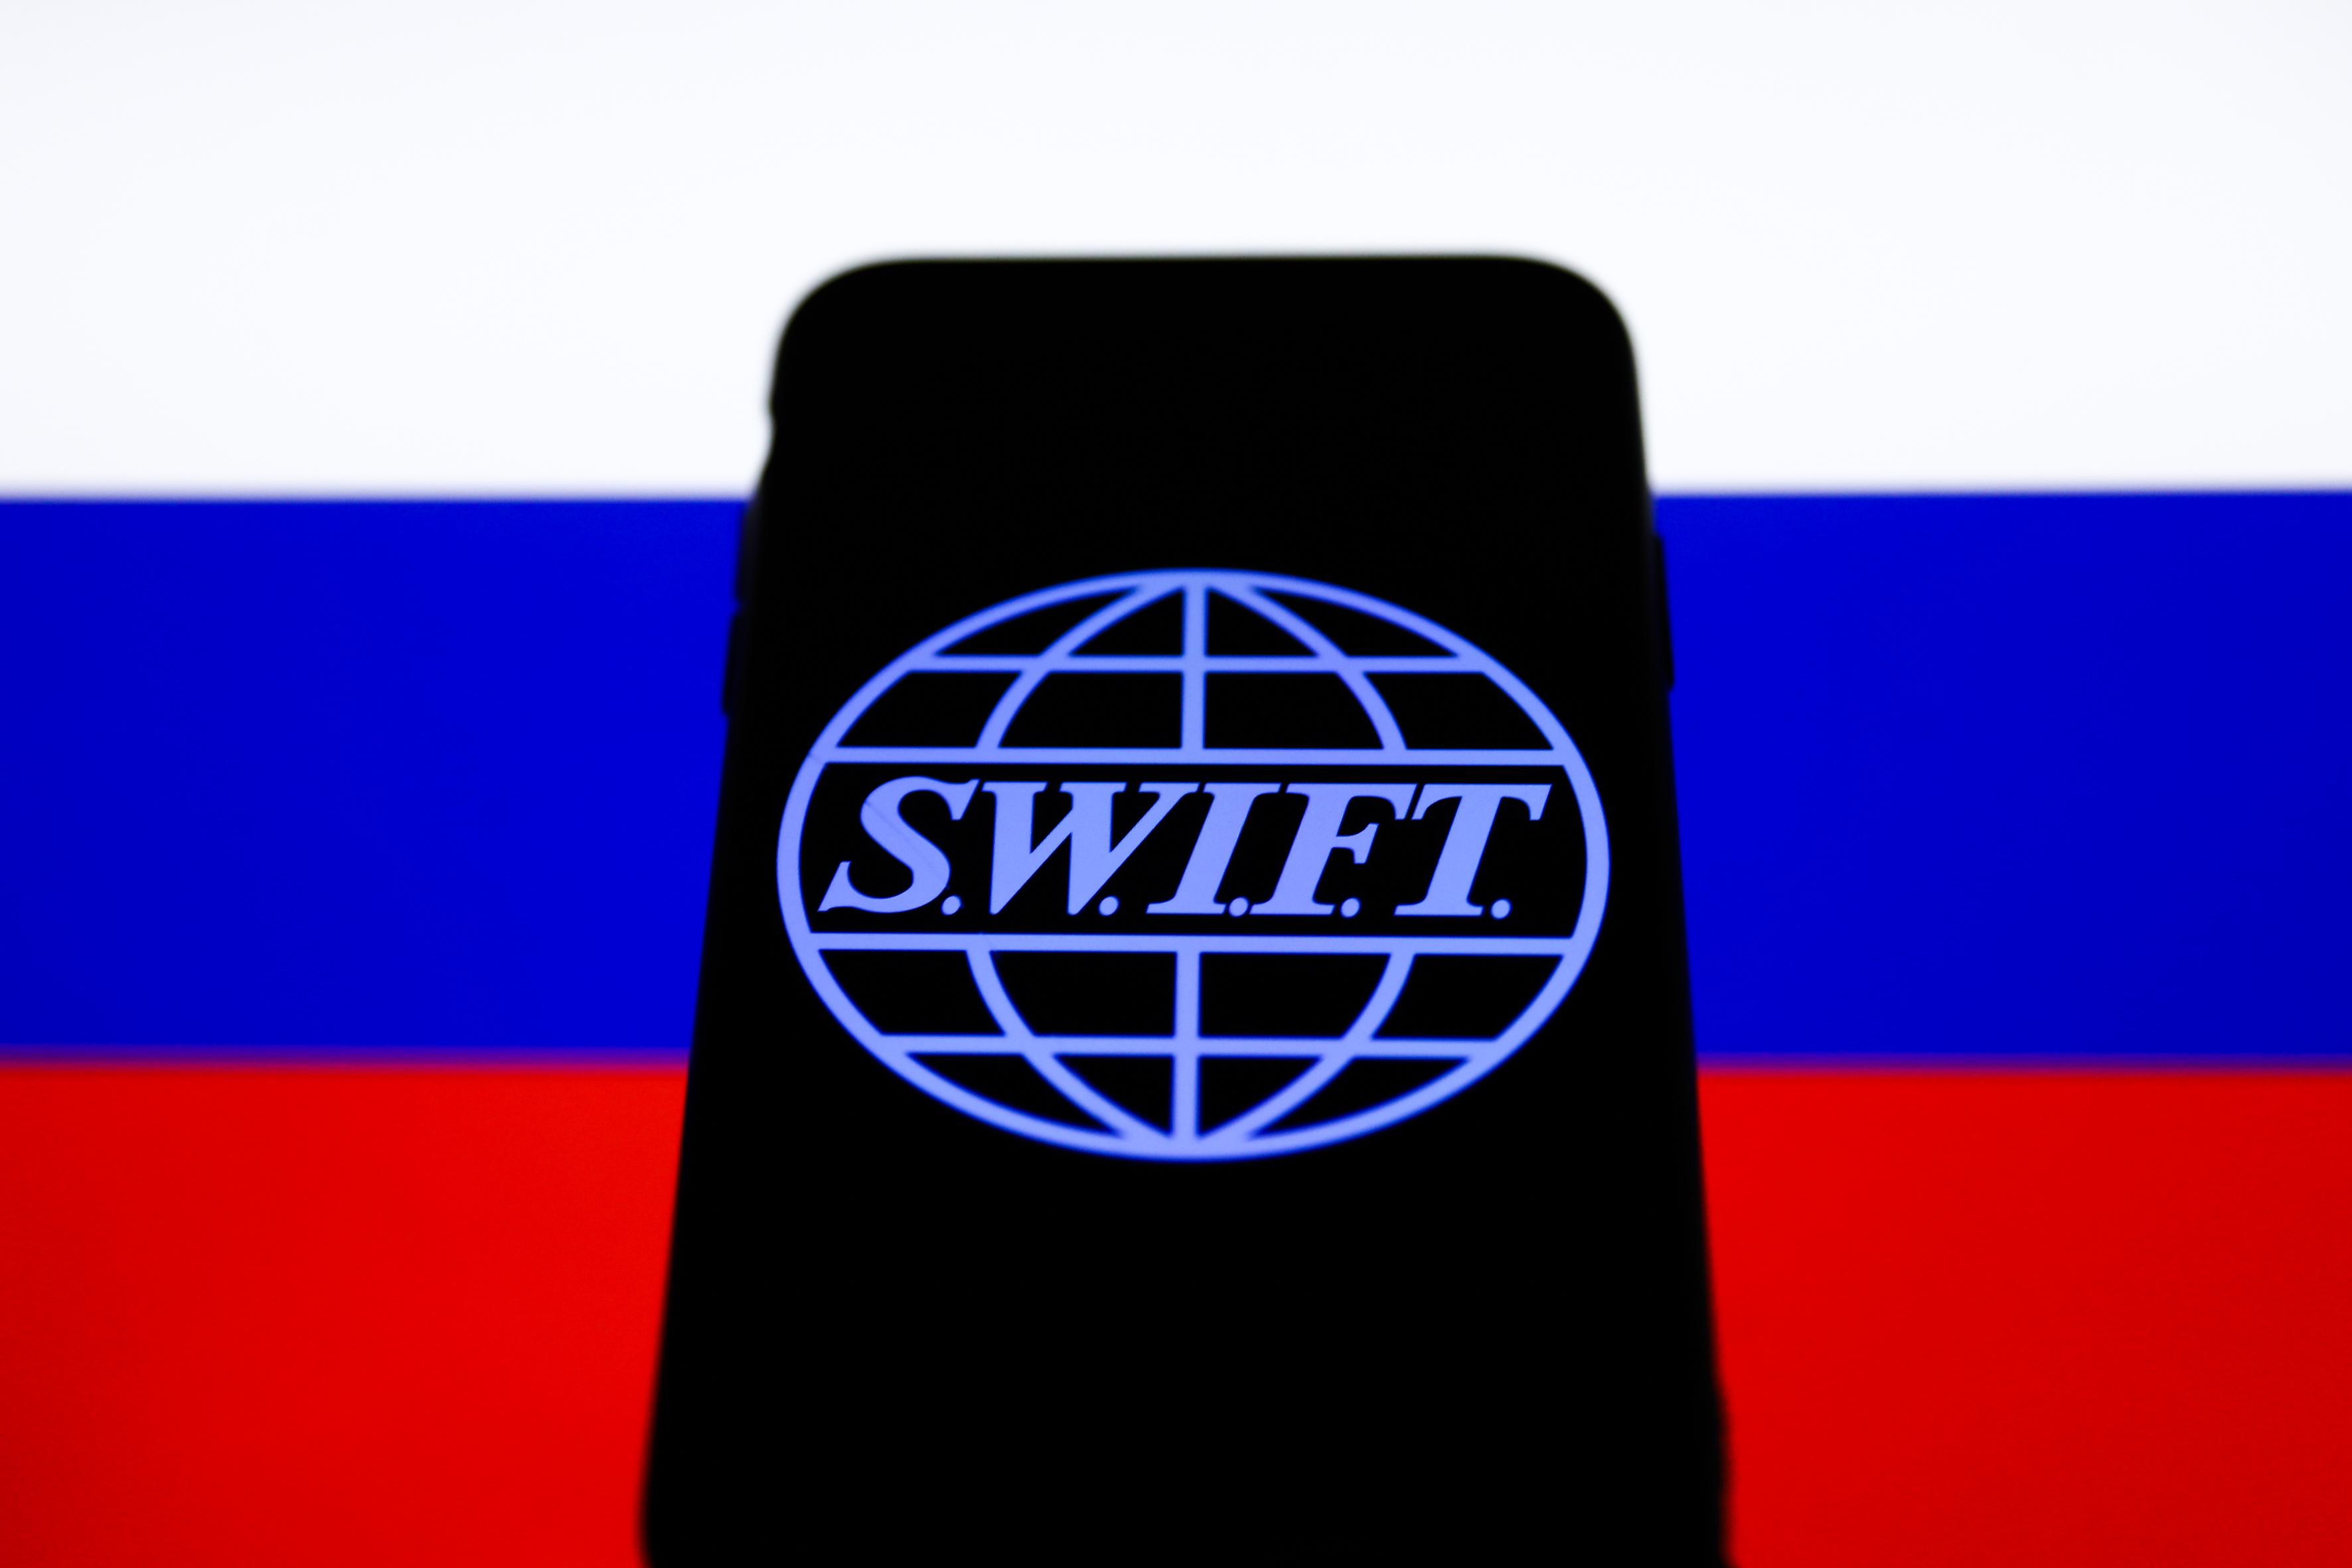 Swift - Free logo icons